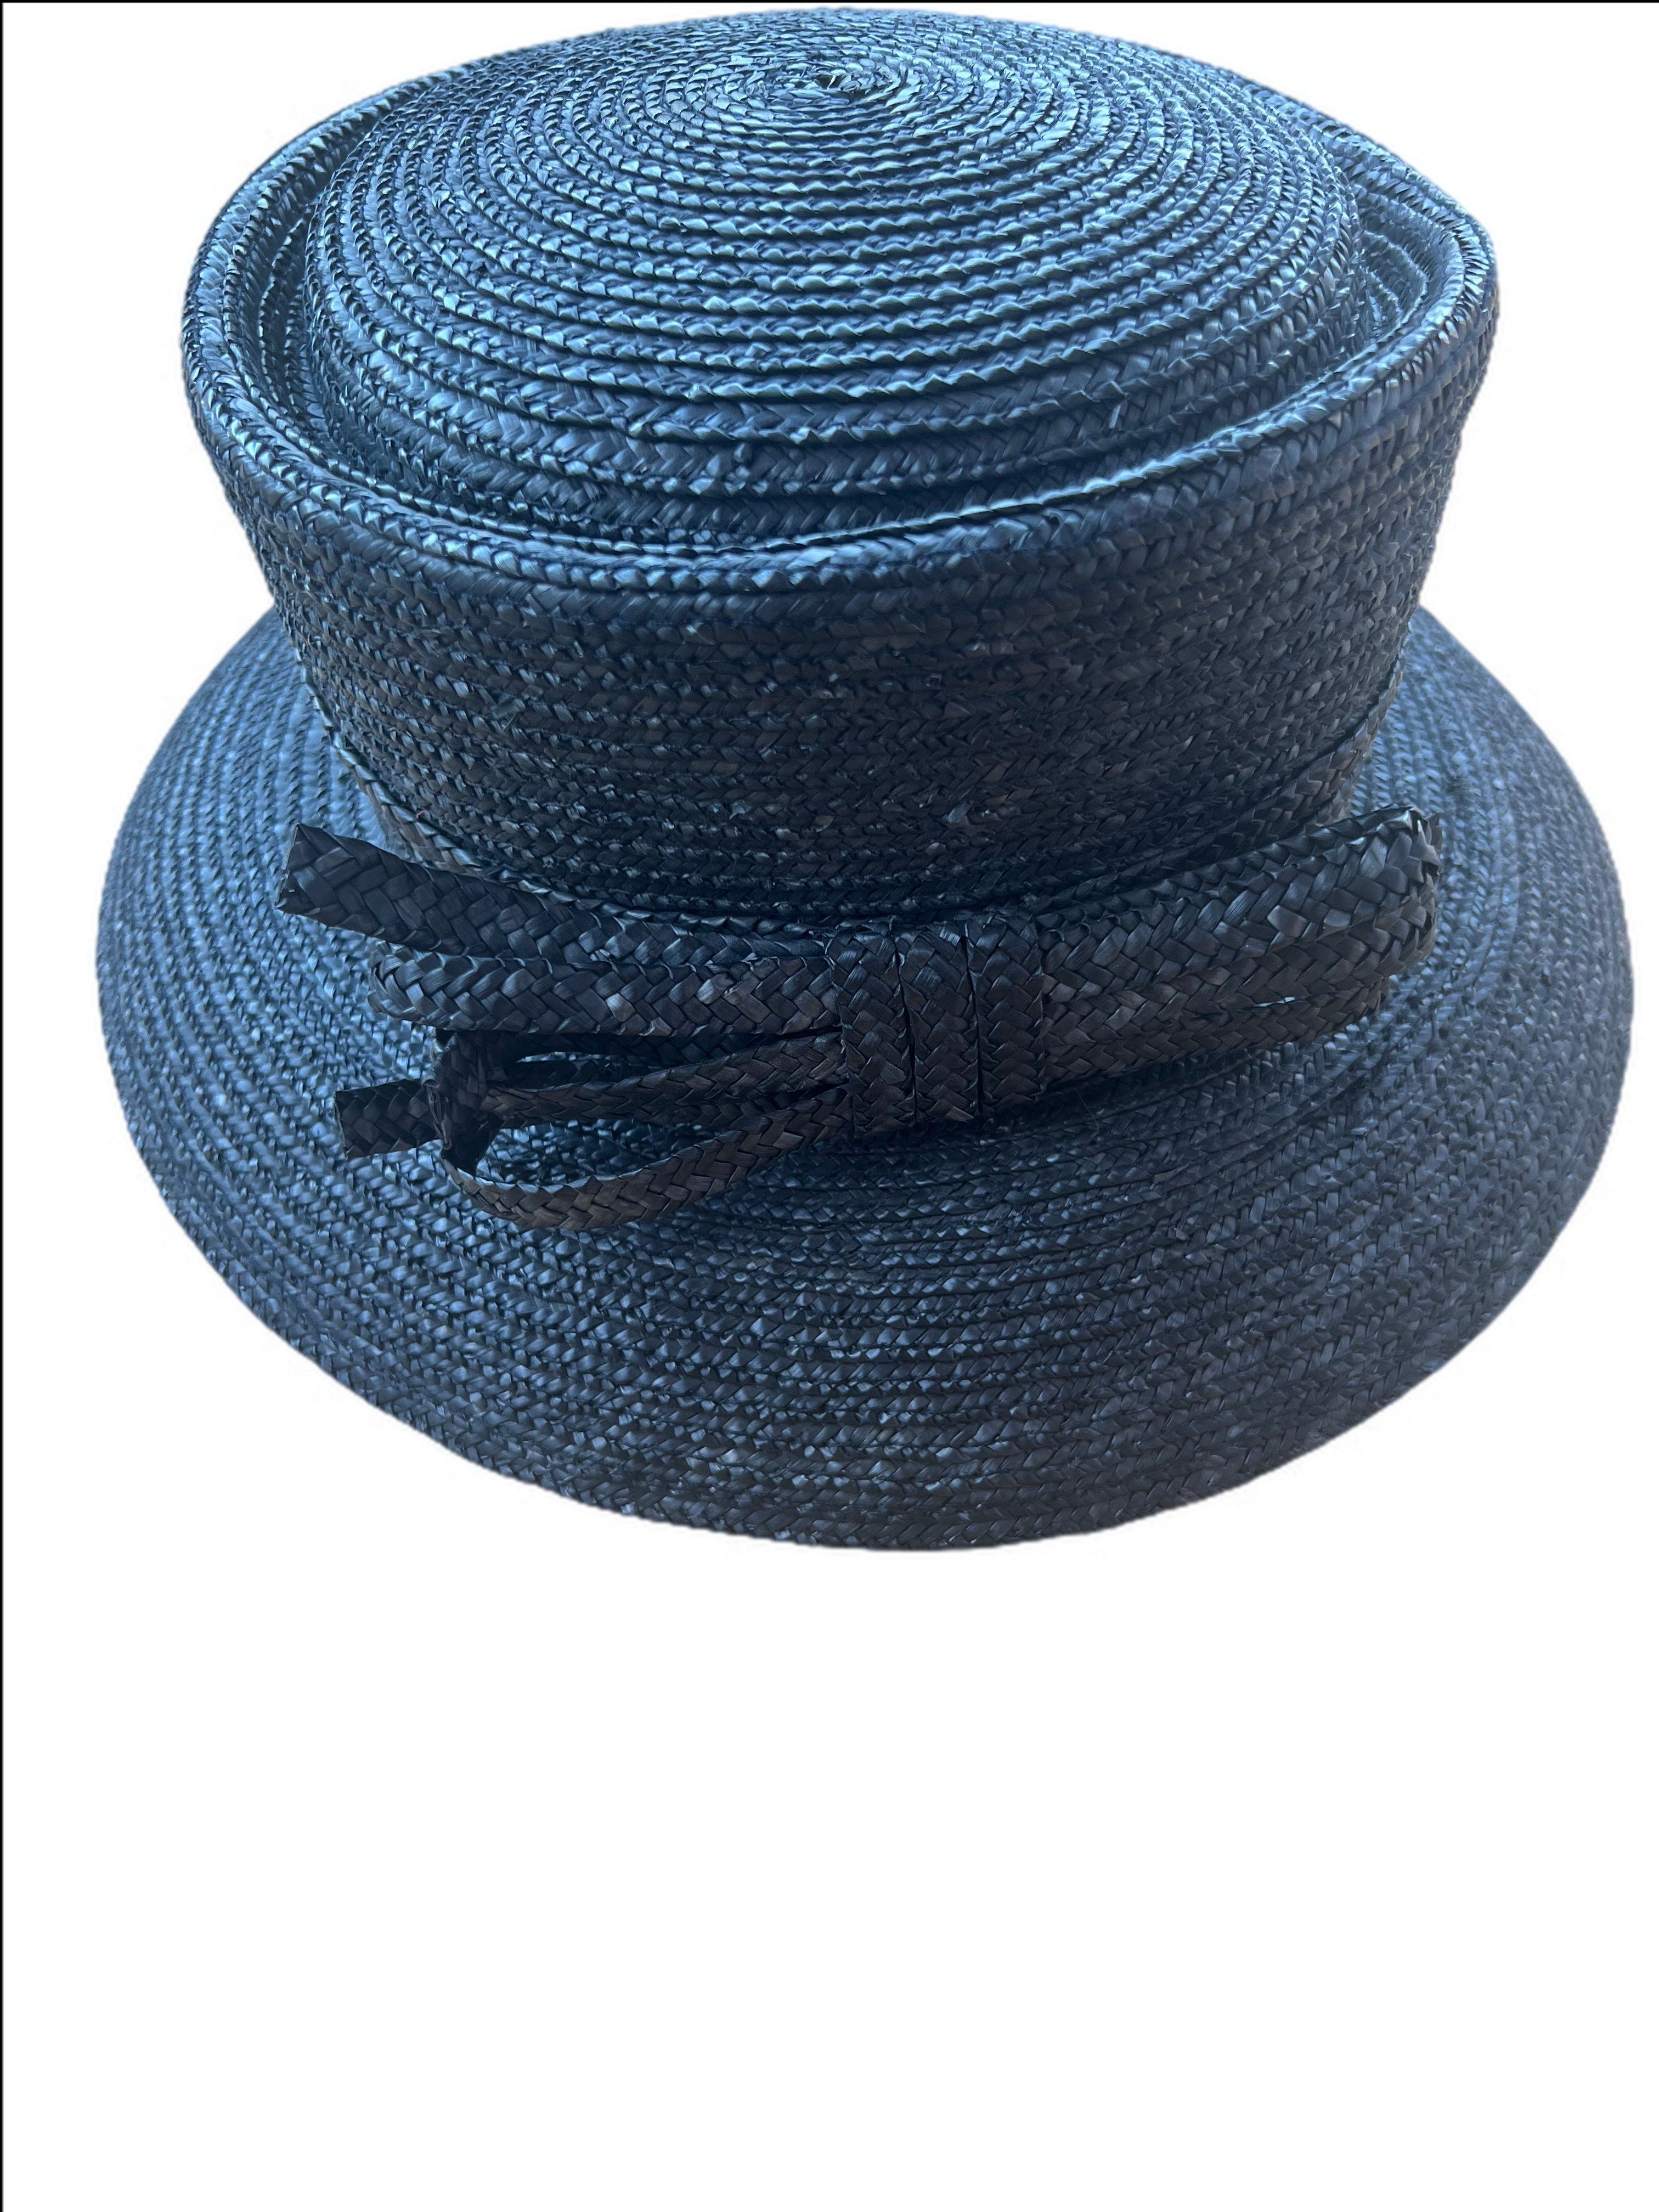 Vintage Audrey Hat with Adjustable Brim